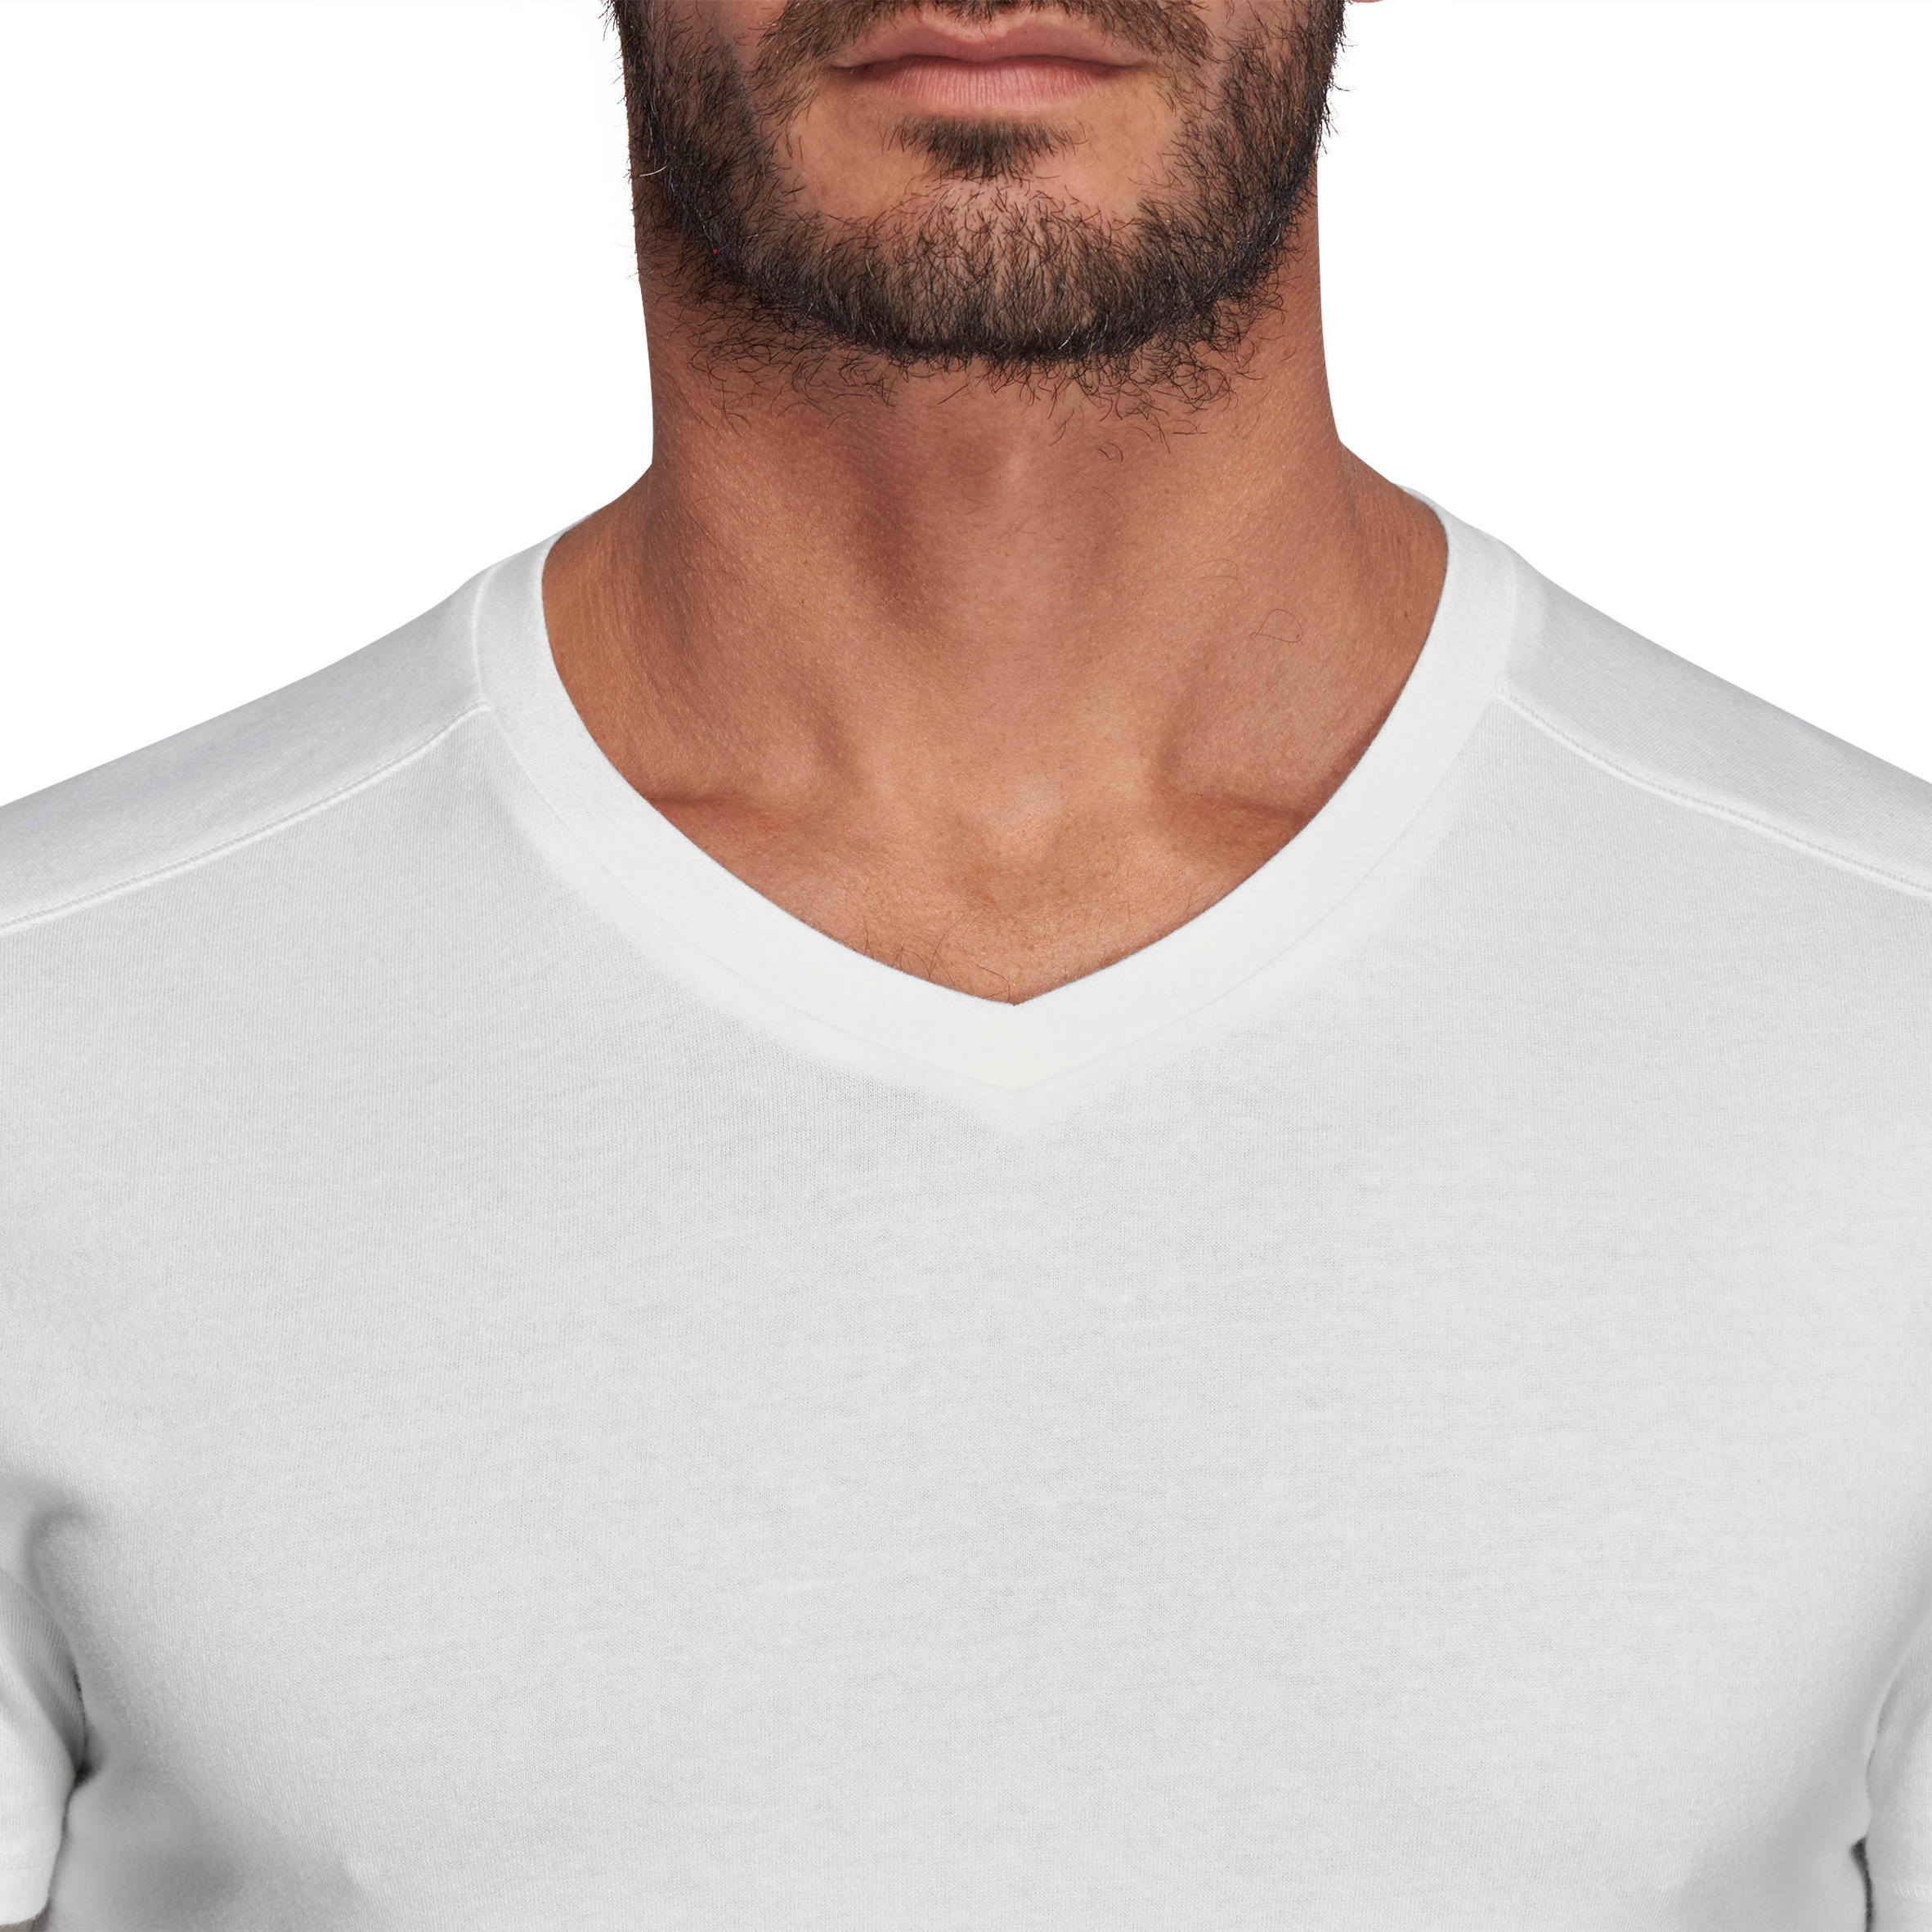 500 Slim-Fit V-Neck Pilates & Gentle Gym T-Shirt - White 6/10